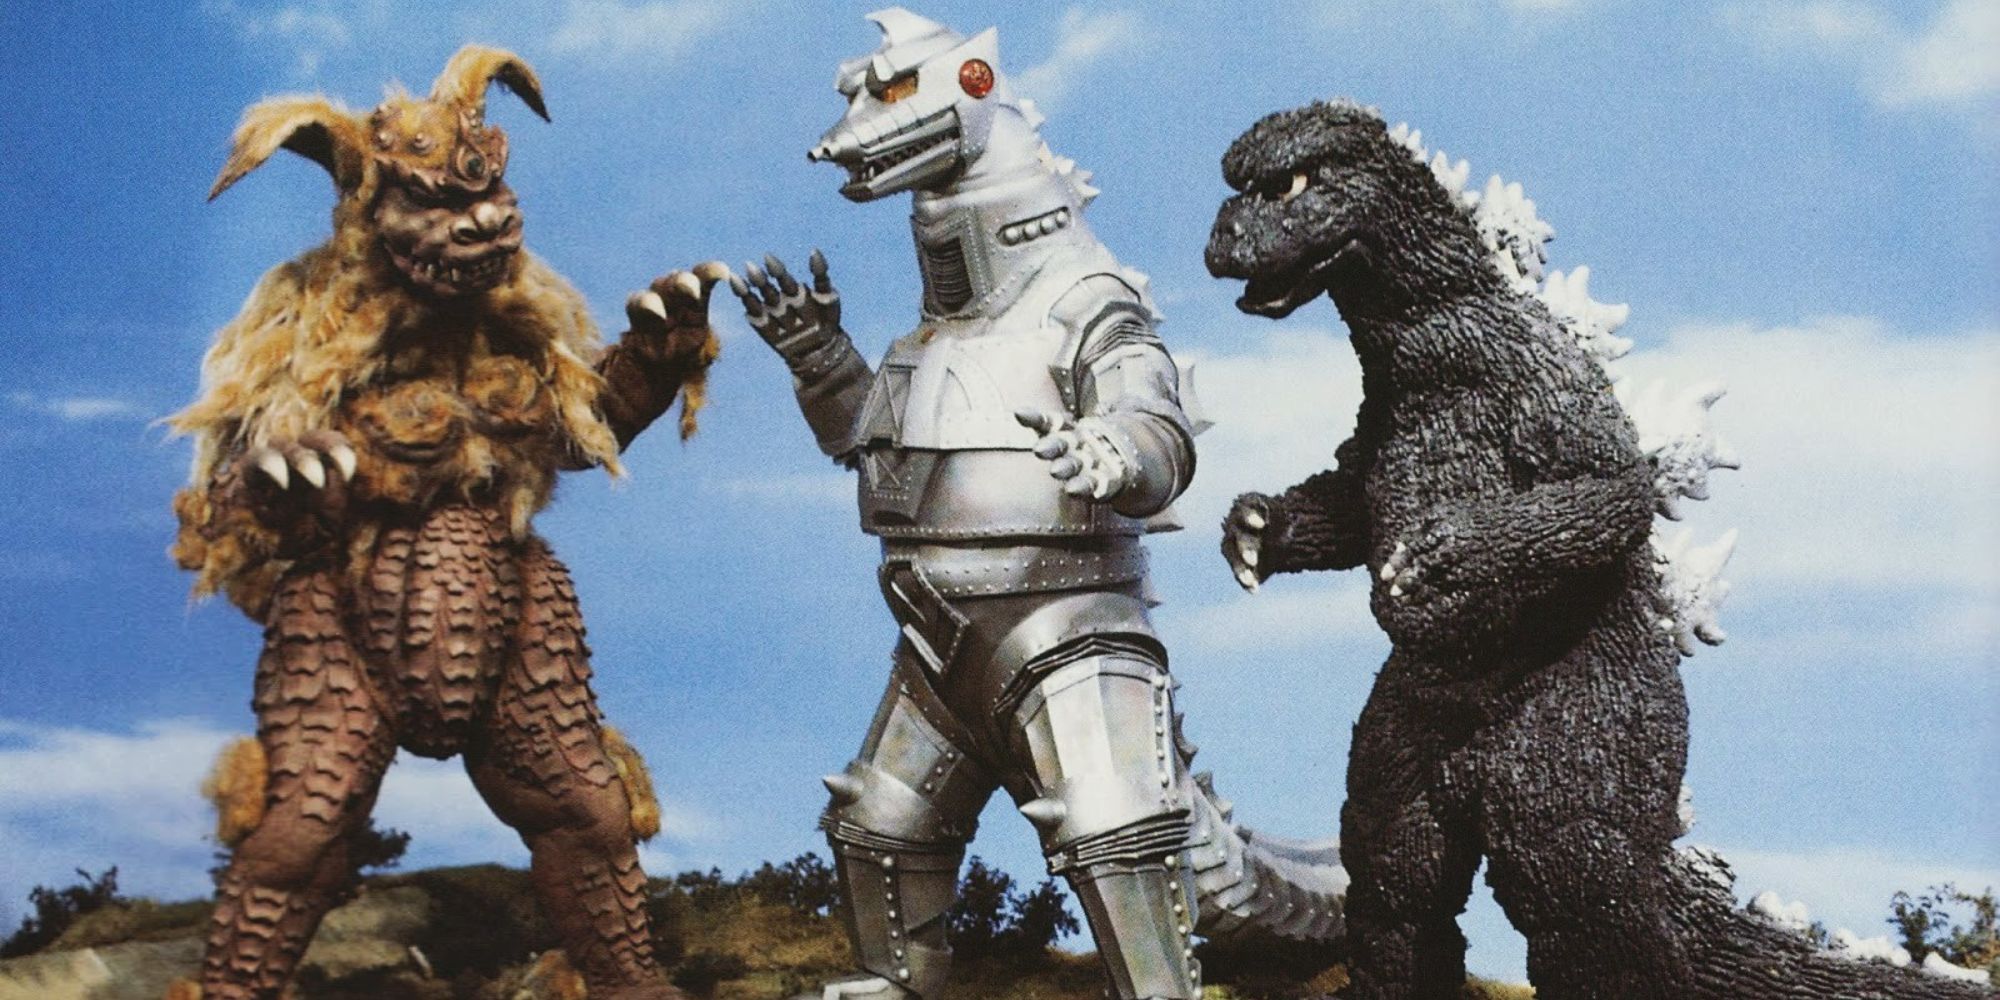 Official promotional image of King Caesar and Godzilla fighting Mechagodzilla in Godzilla vs. Mechagodzilla